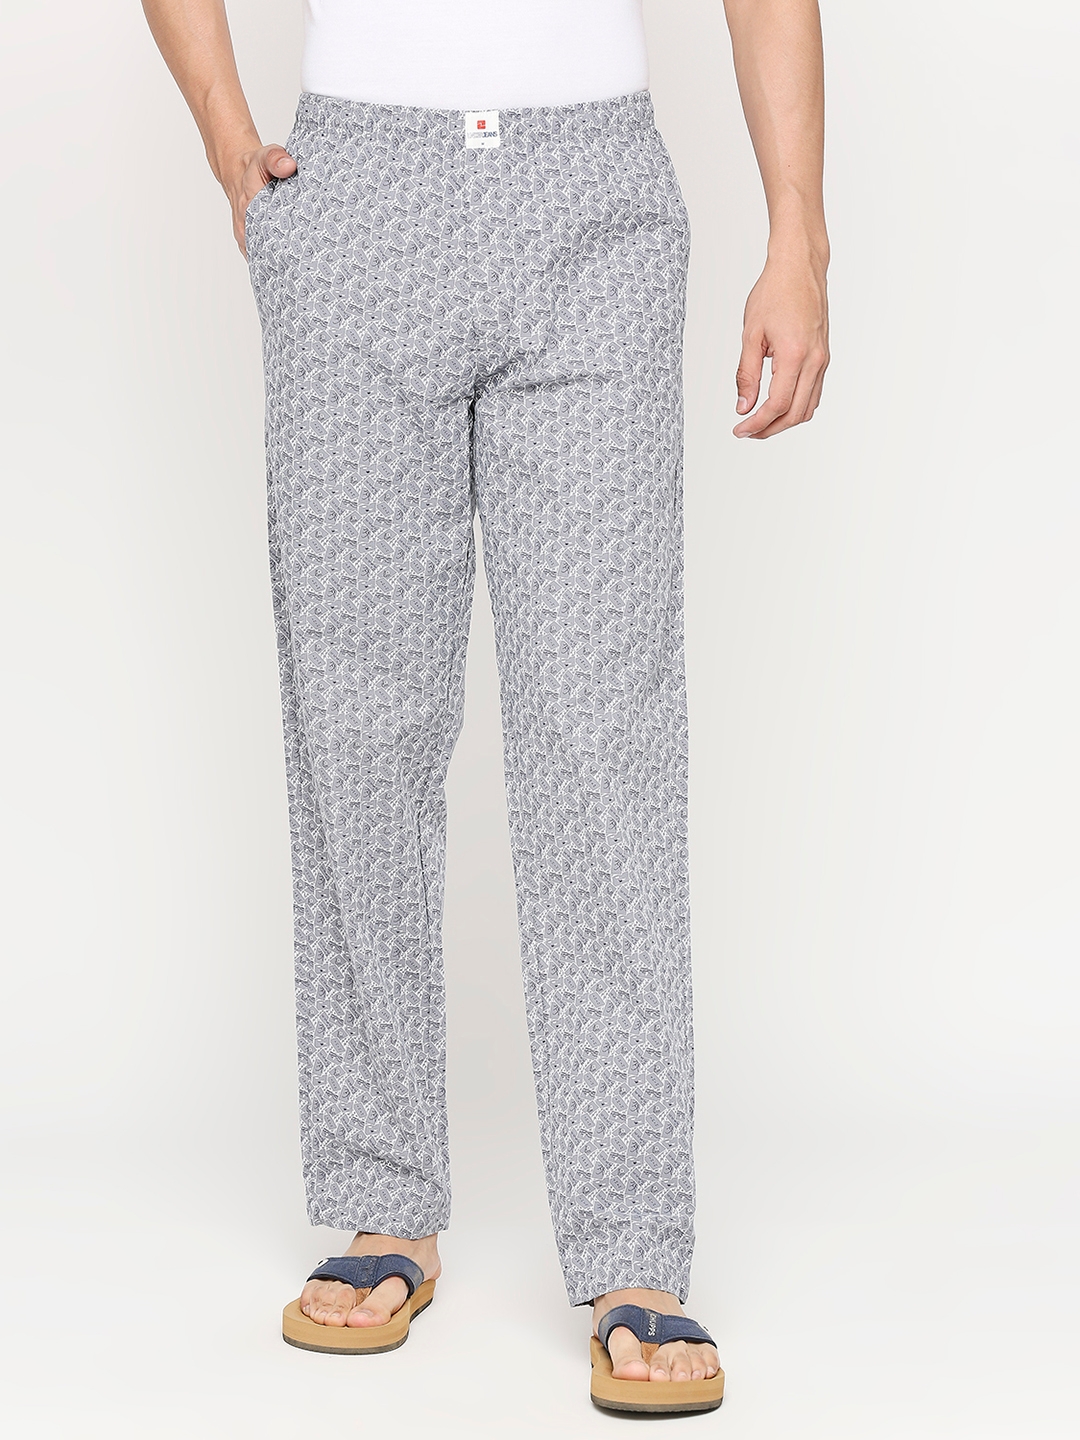 Underjeans by Spykar Men Grey & White Cotton Regular Fit Pyjama